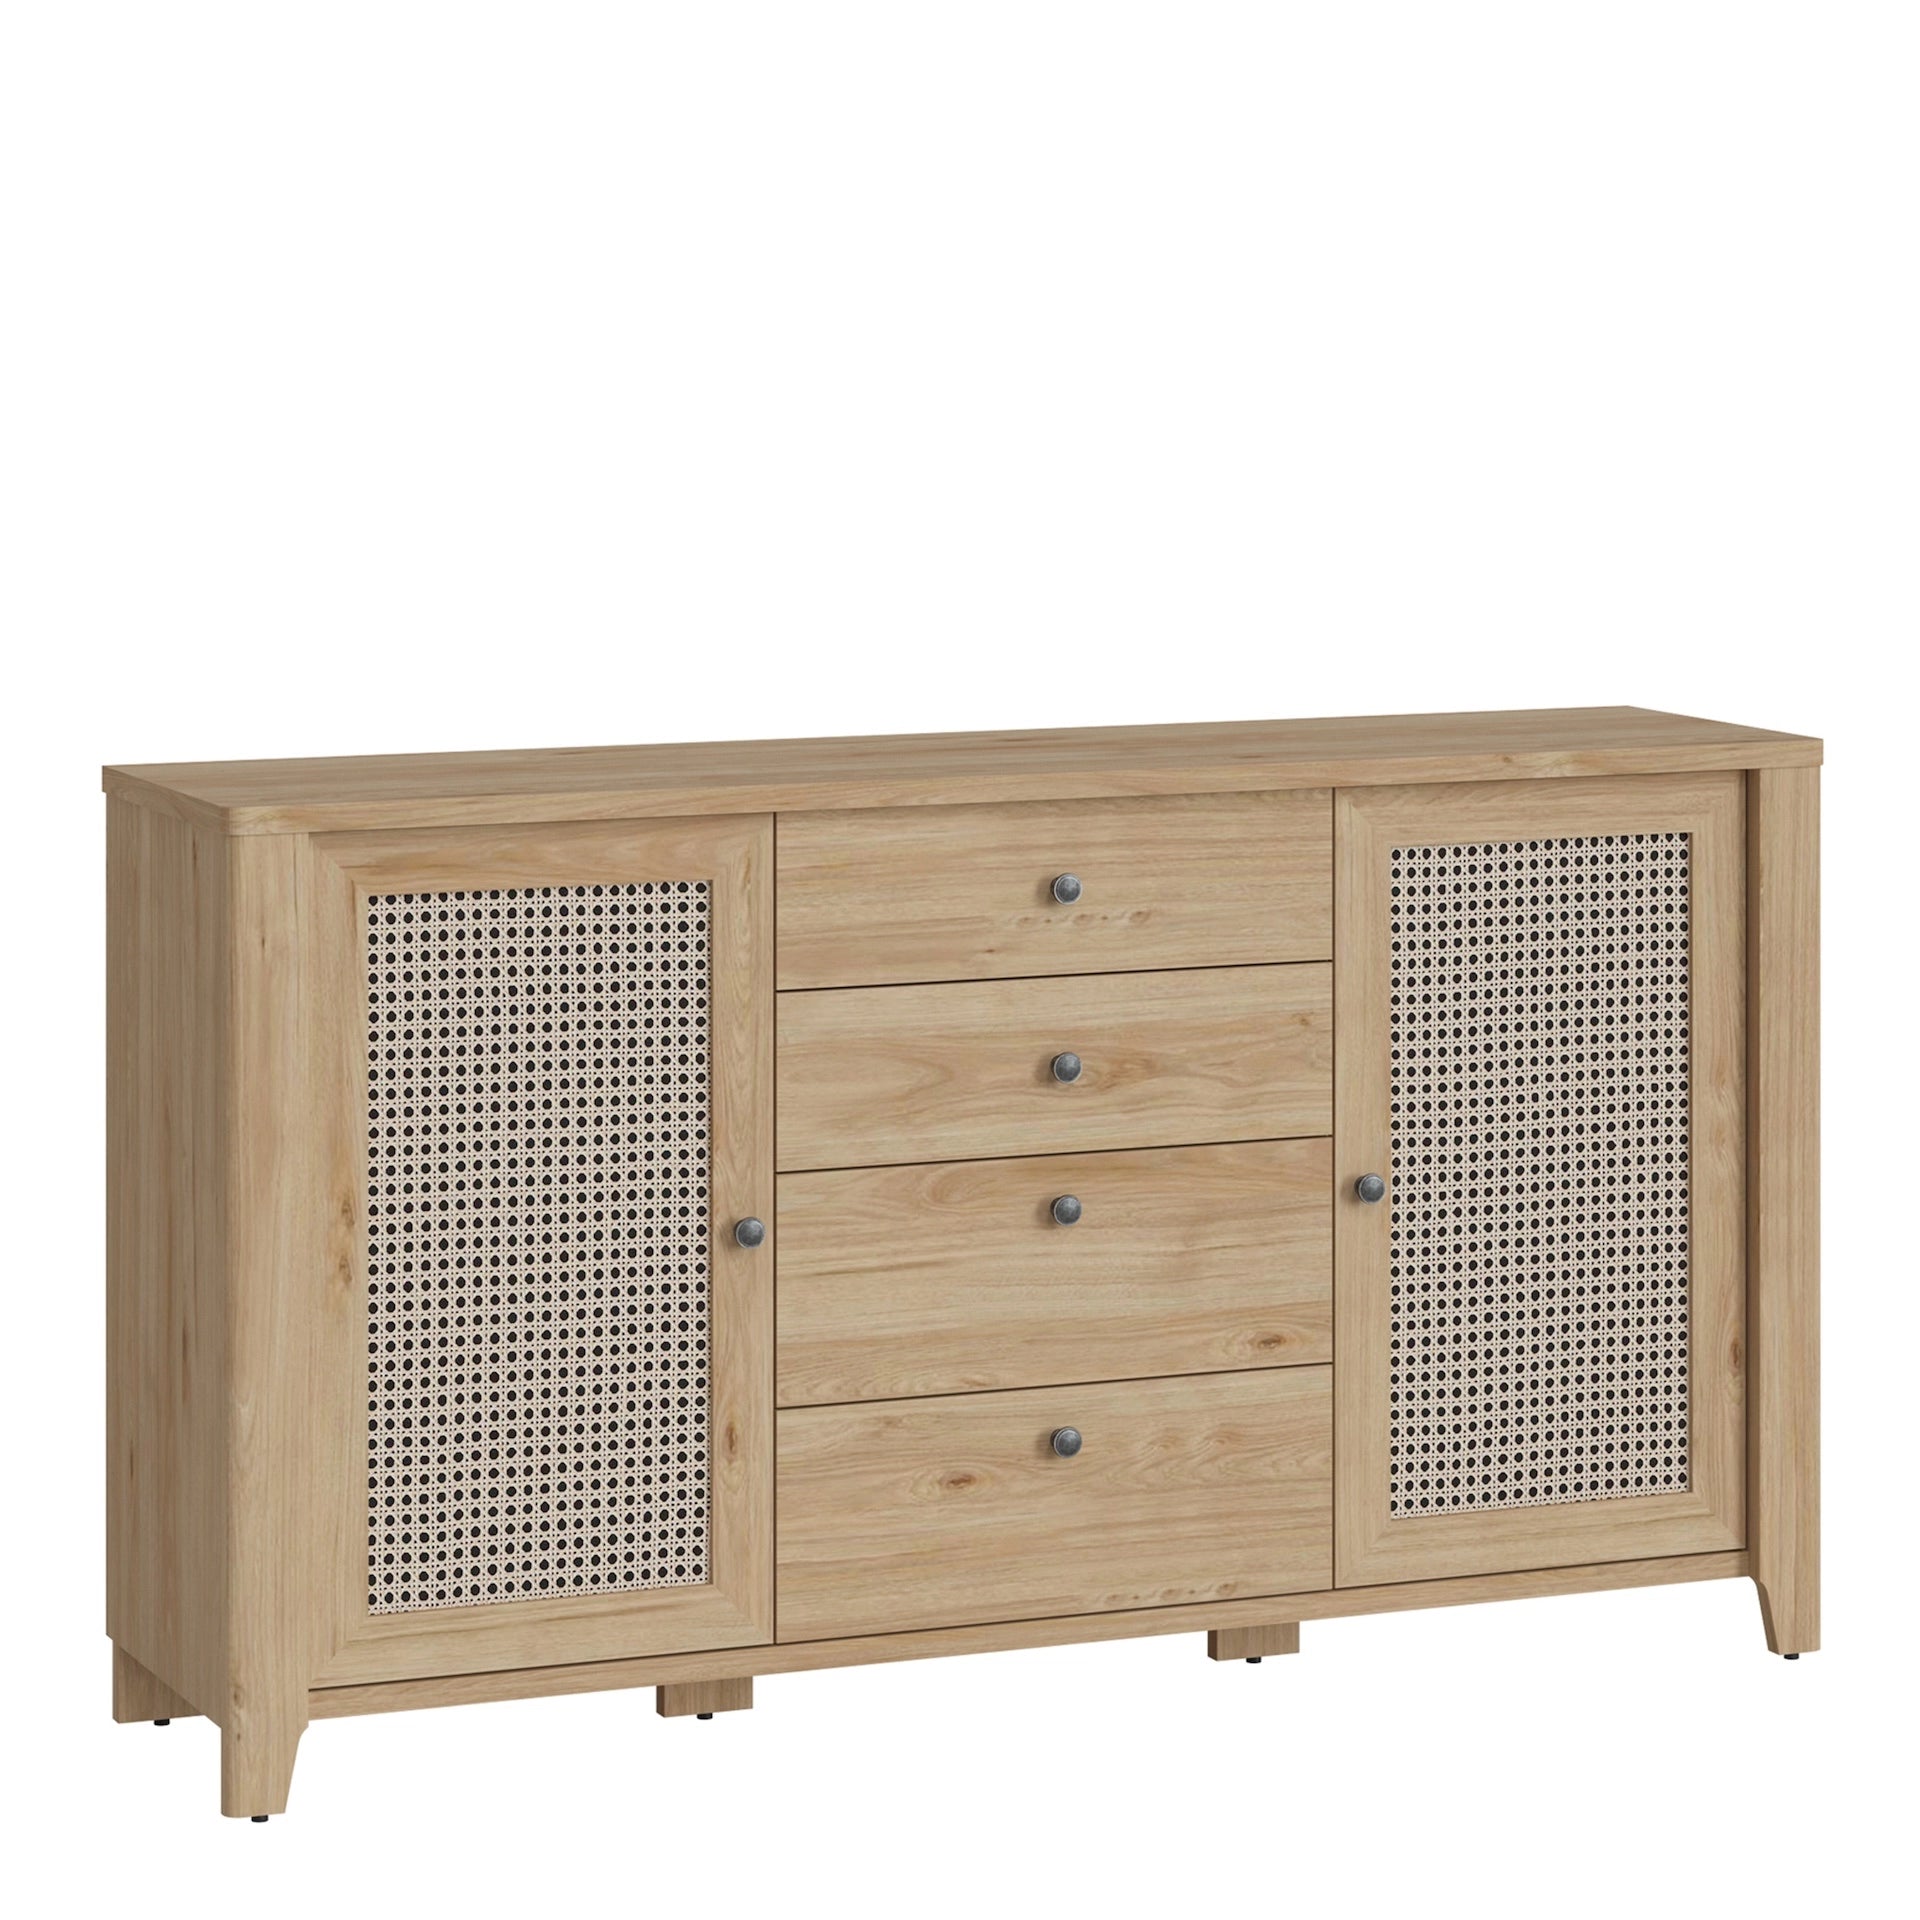 Furniture To Go Cestino 2 Door 4 Drawer Sideboard in Jackson Hickory Oak & Rattan Effect